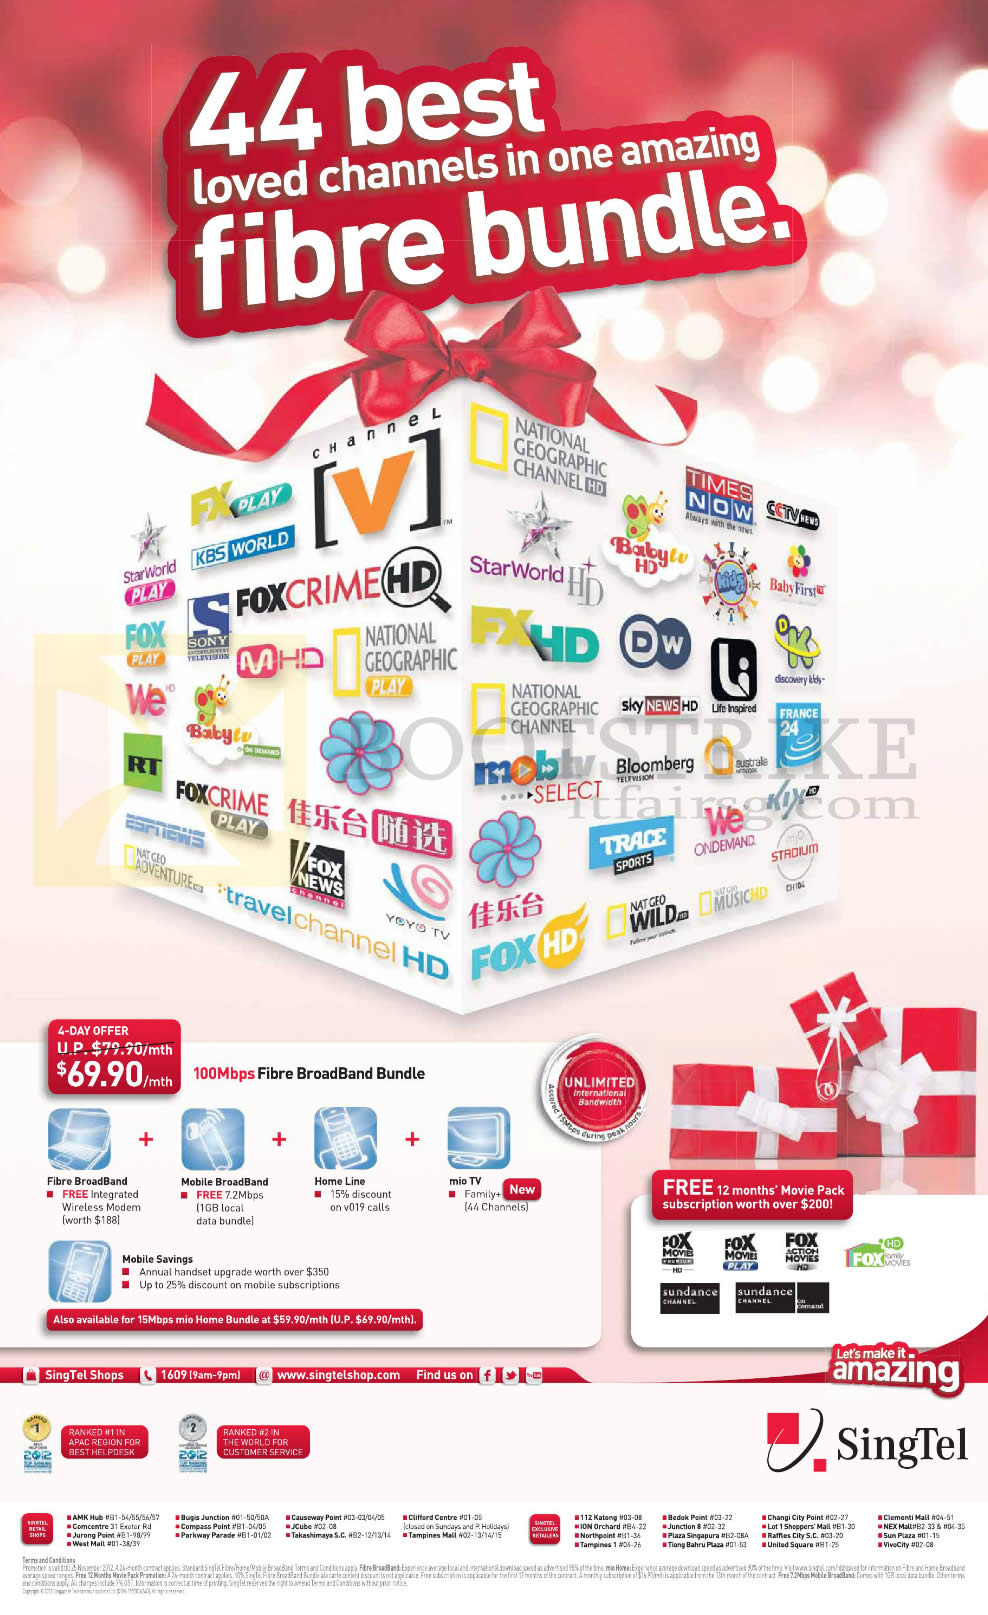 SITEX 2012 price list image brochure of Singtel Broadband Bundle Fibre Bundle, Mobile Broadband, Home Line, Mio TV, 44 Channels, Movie Pack